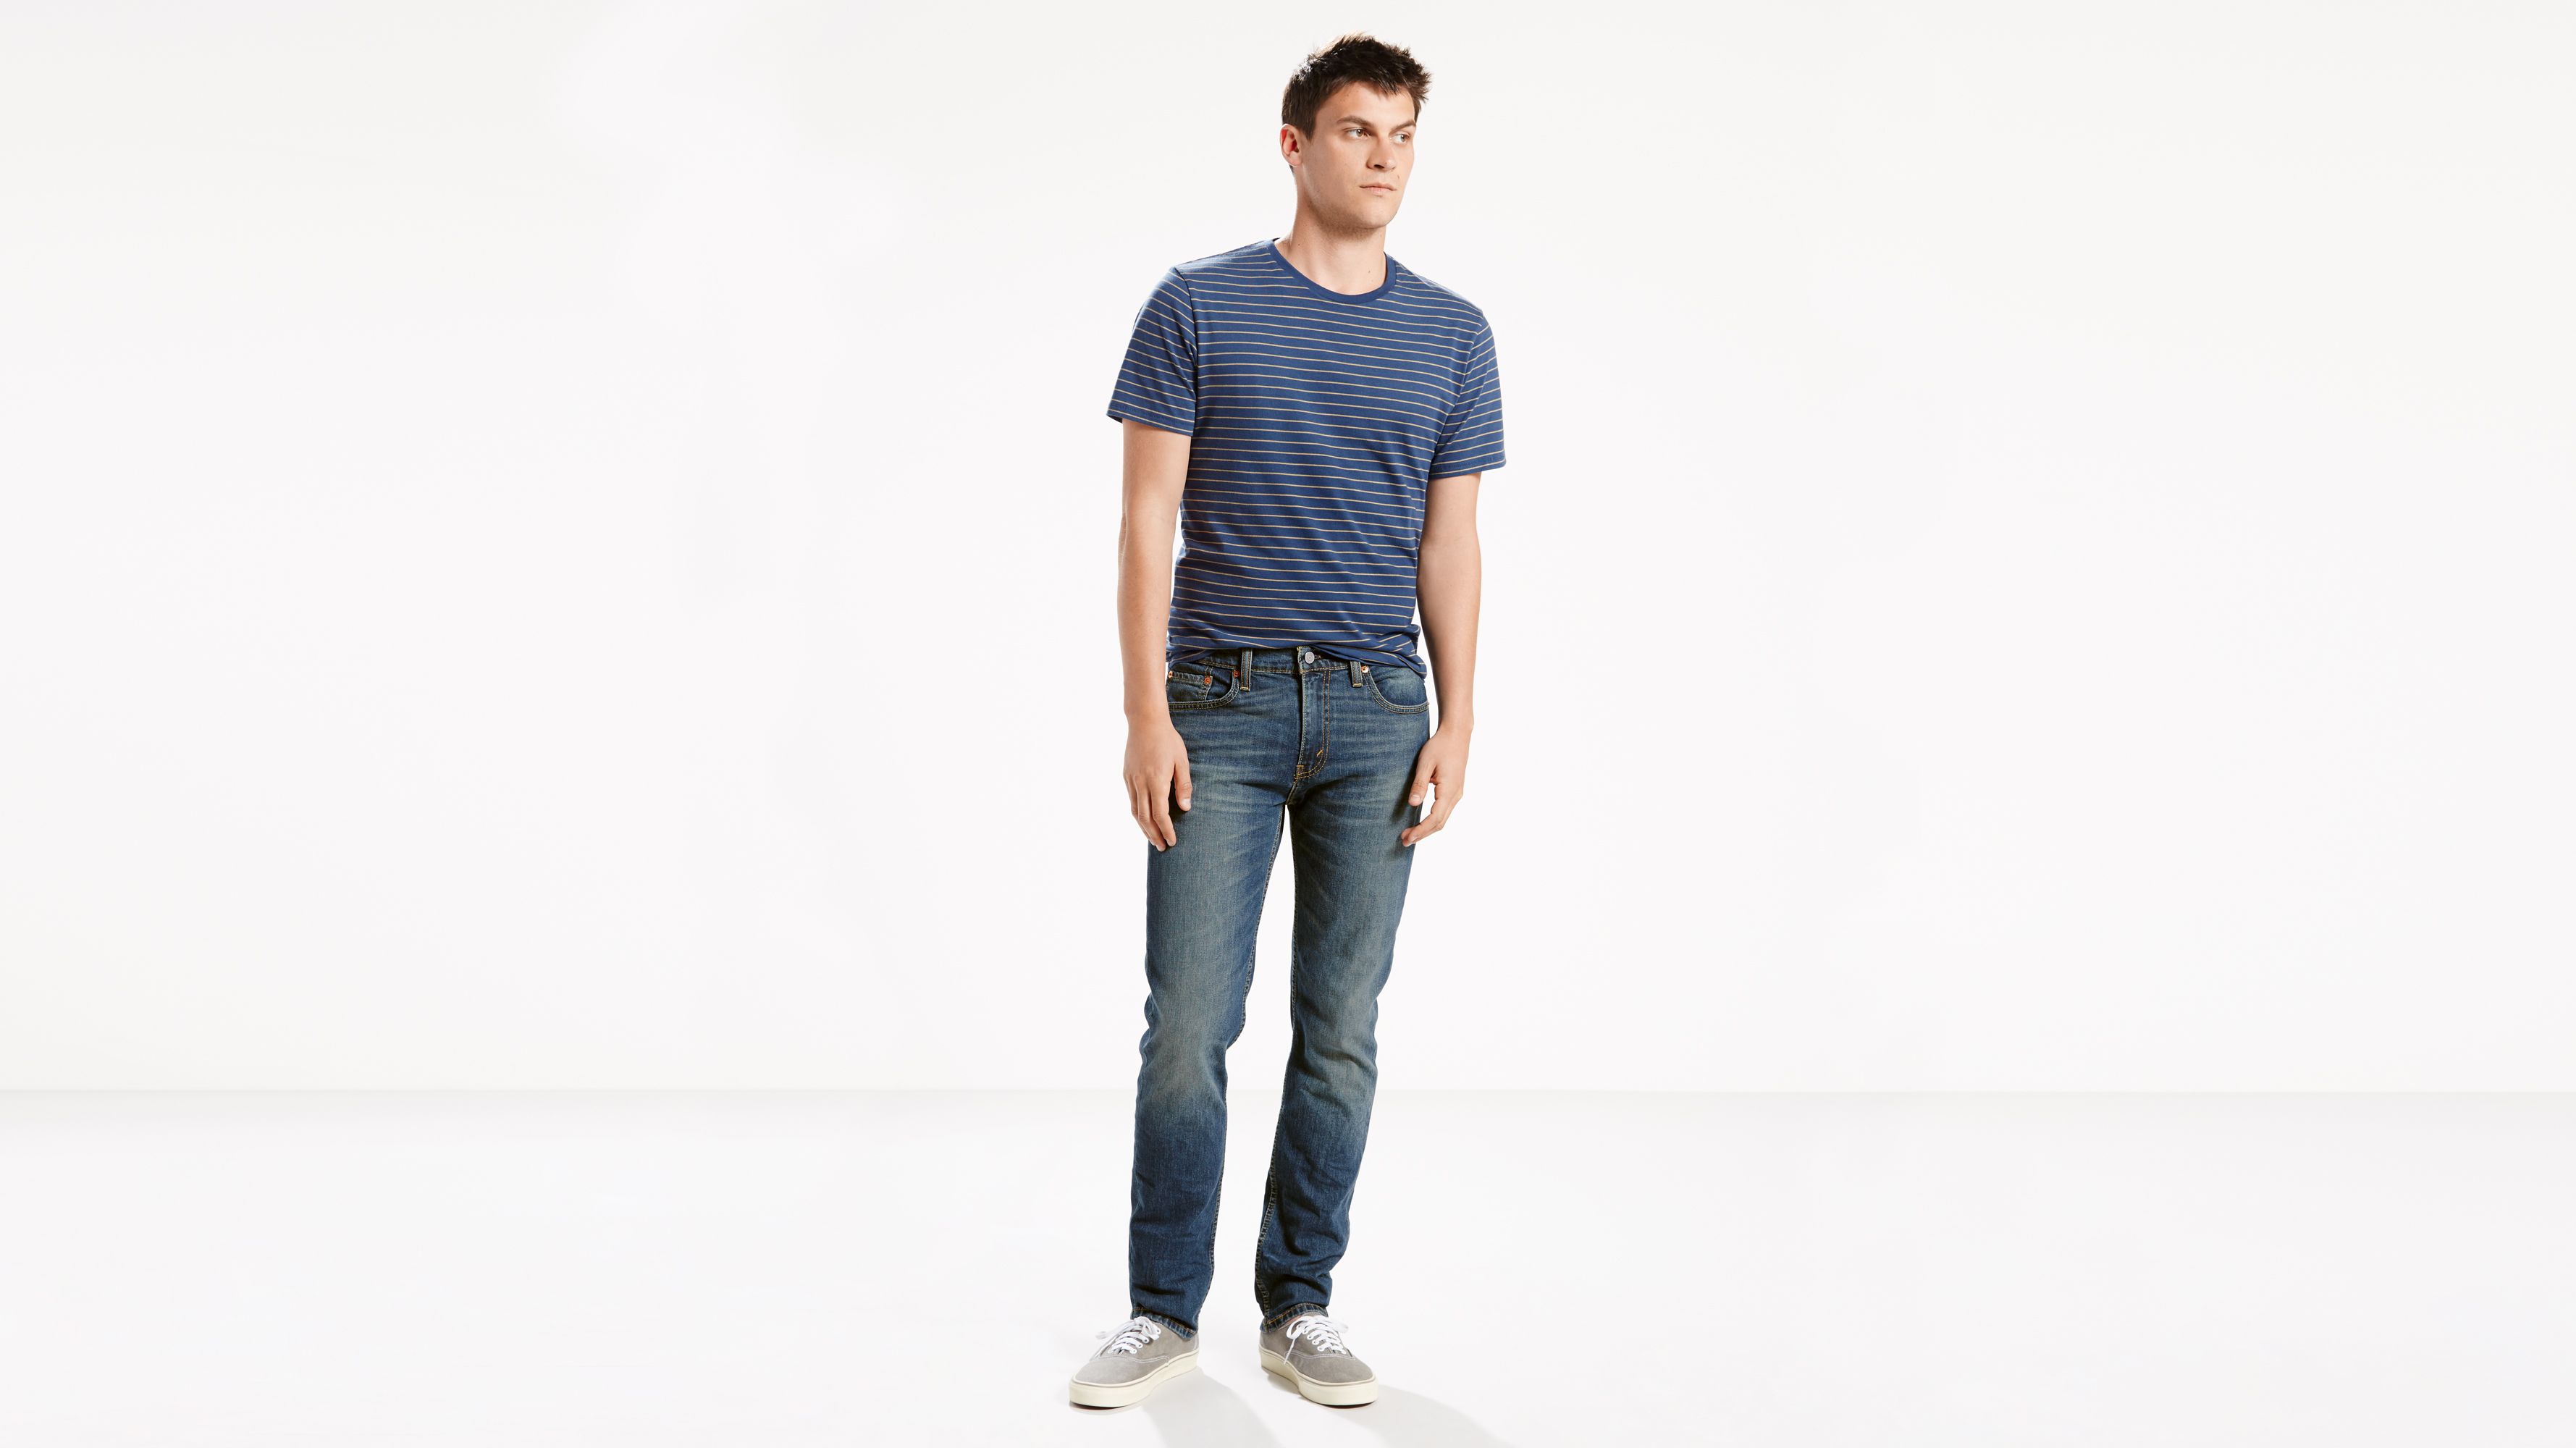 511 selvedge jeans